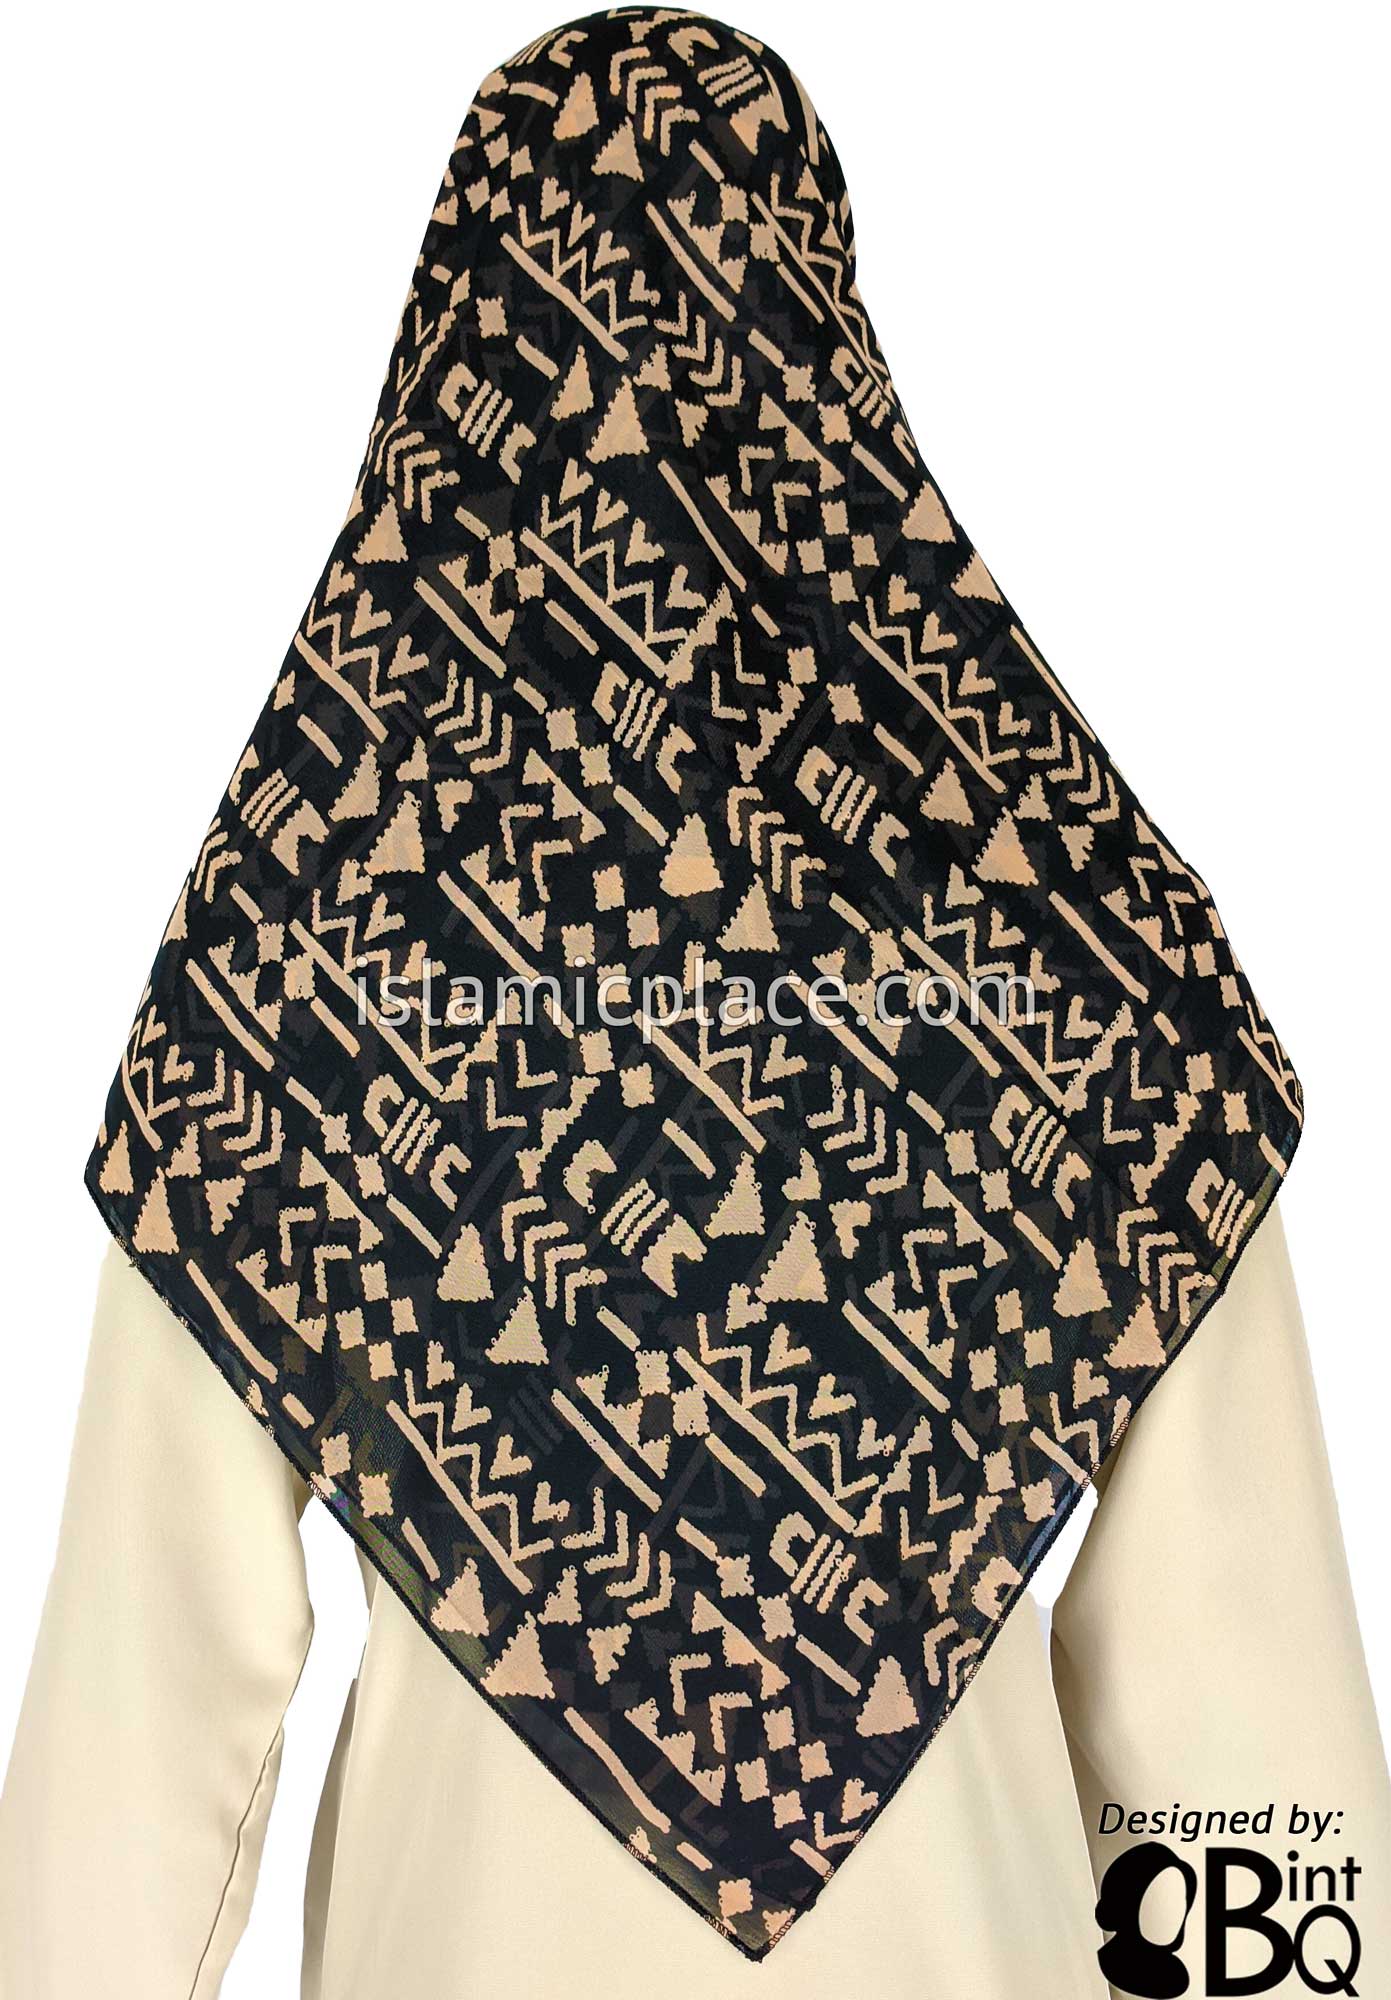 Black with Tan Hieroglyph Design - 45" Square Printed Khimar